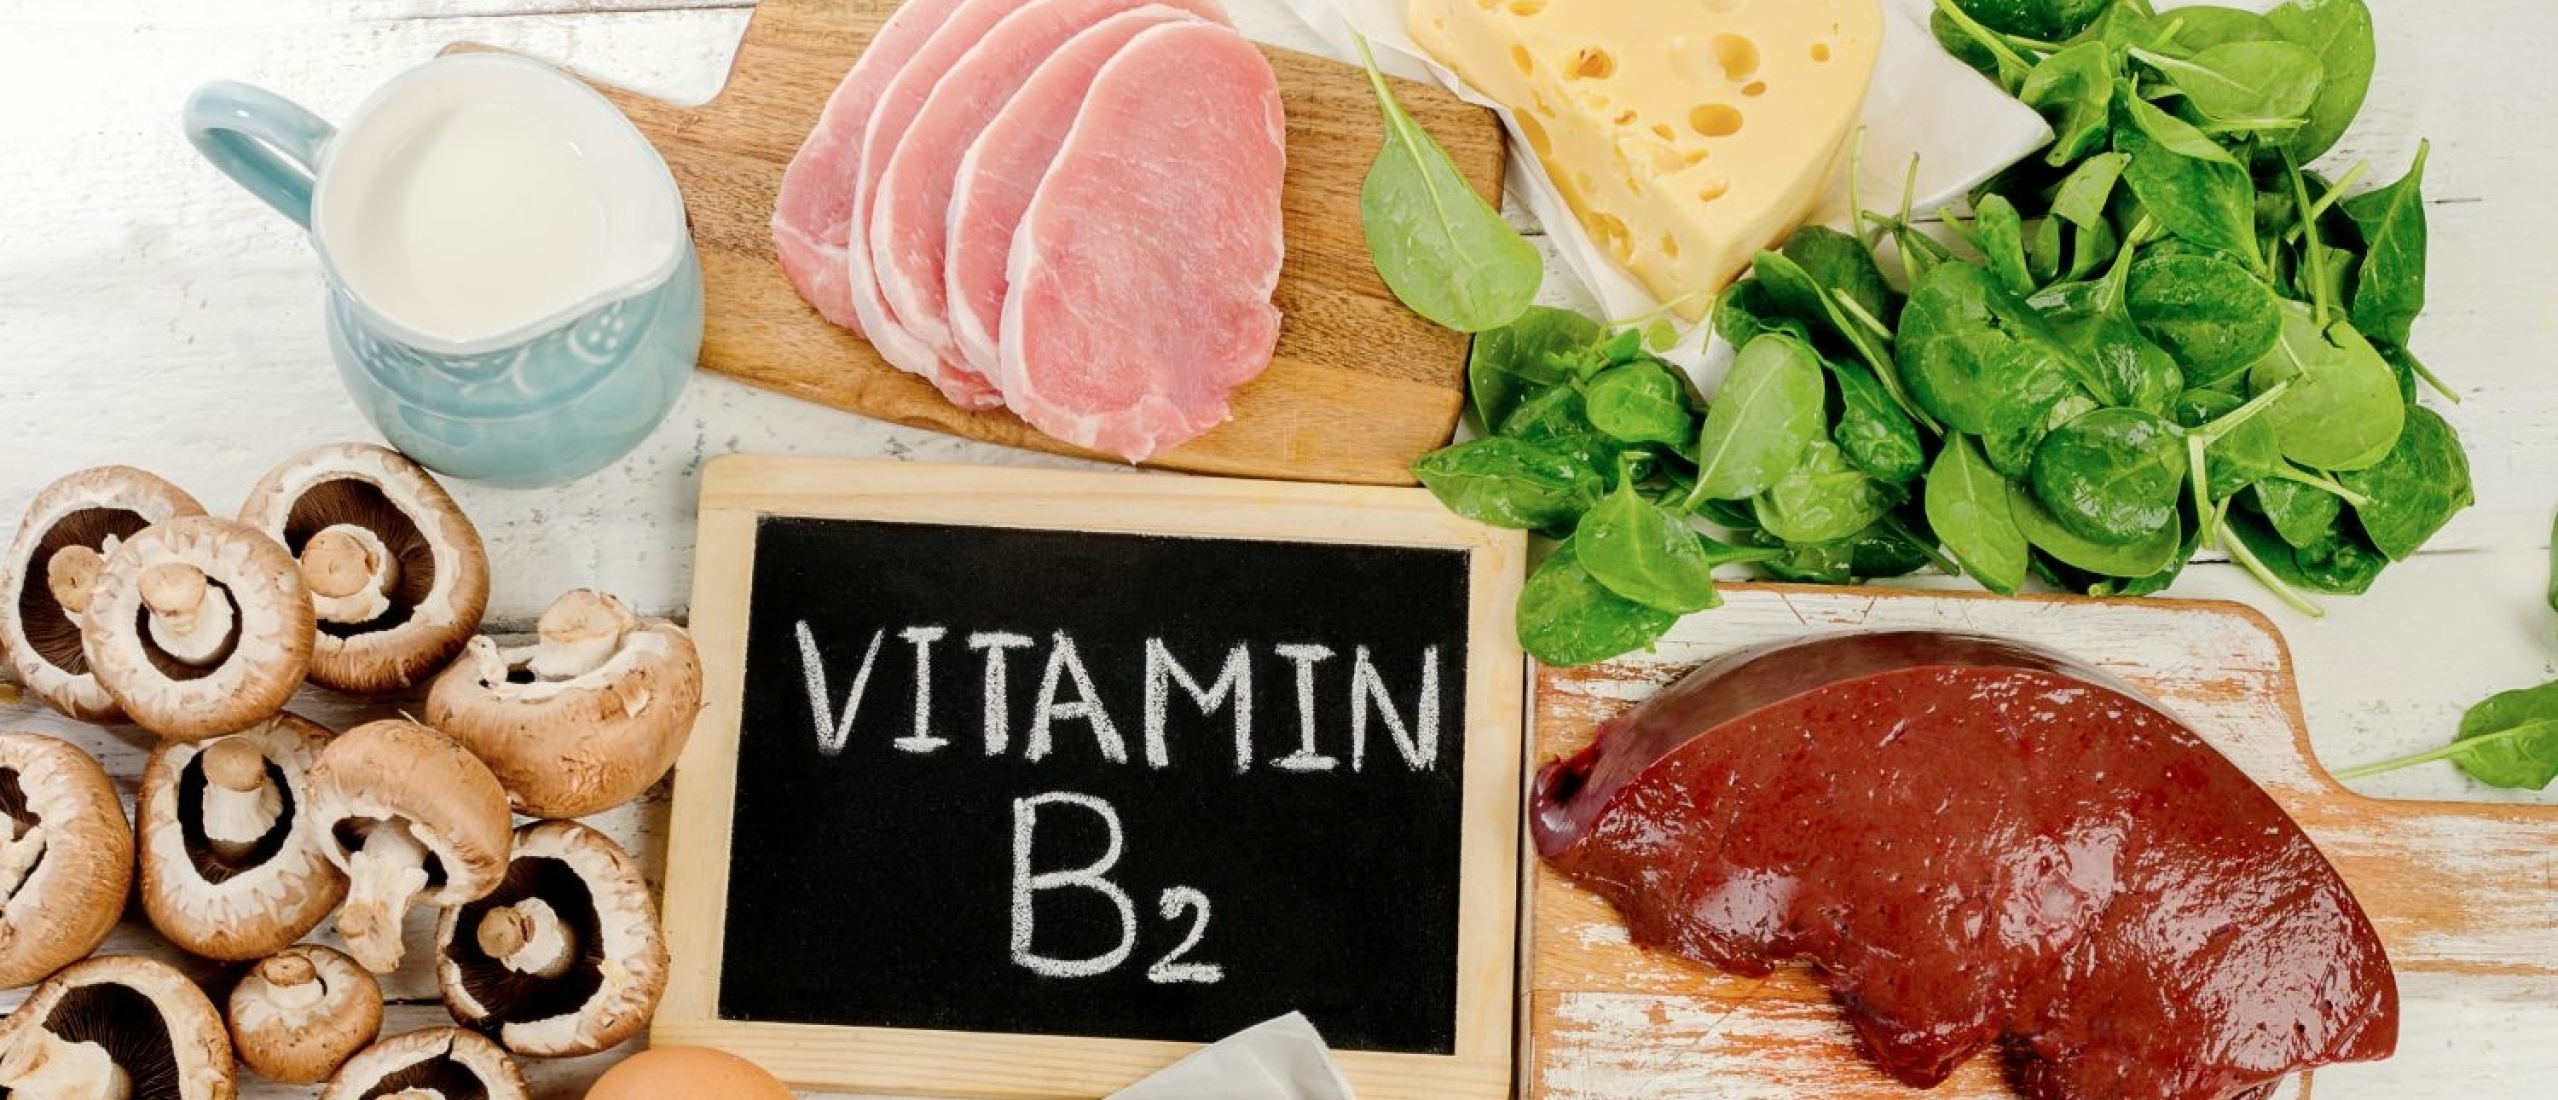 Vitamine b2